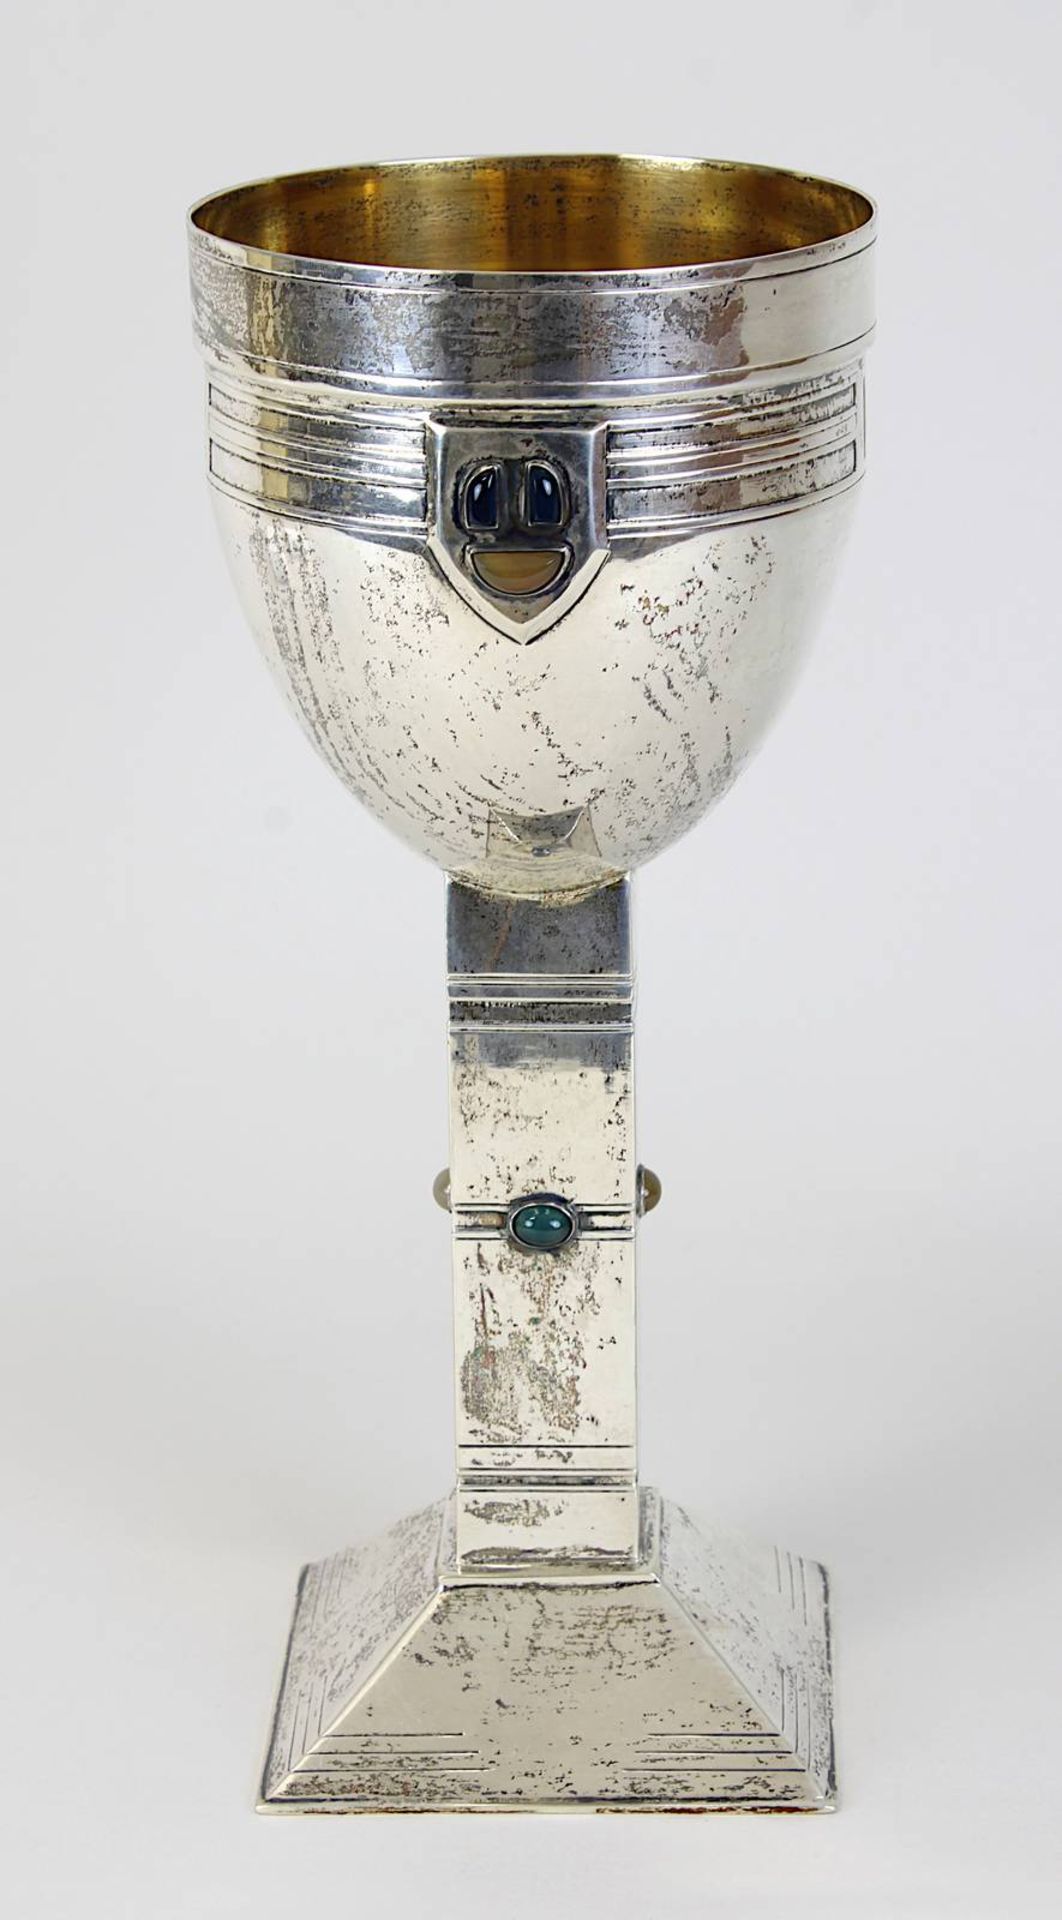 Pokal aus 800er Silber, Silberschmiede Gutruf Hamburg, Jugendstil um 1910, pyramidenförmiger Fuß mit